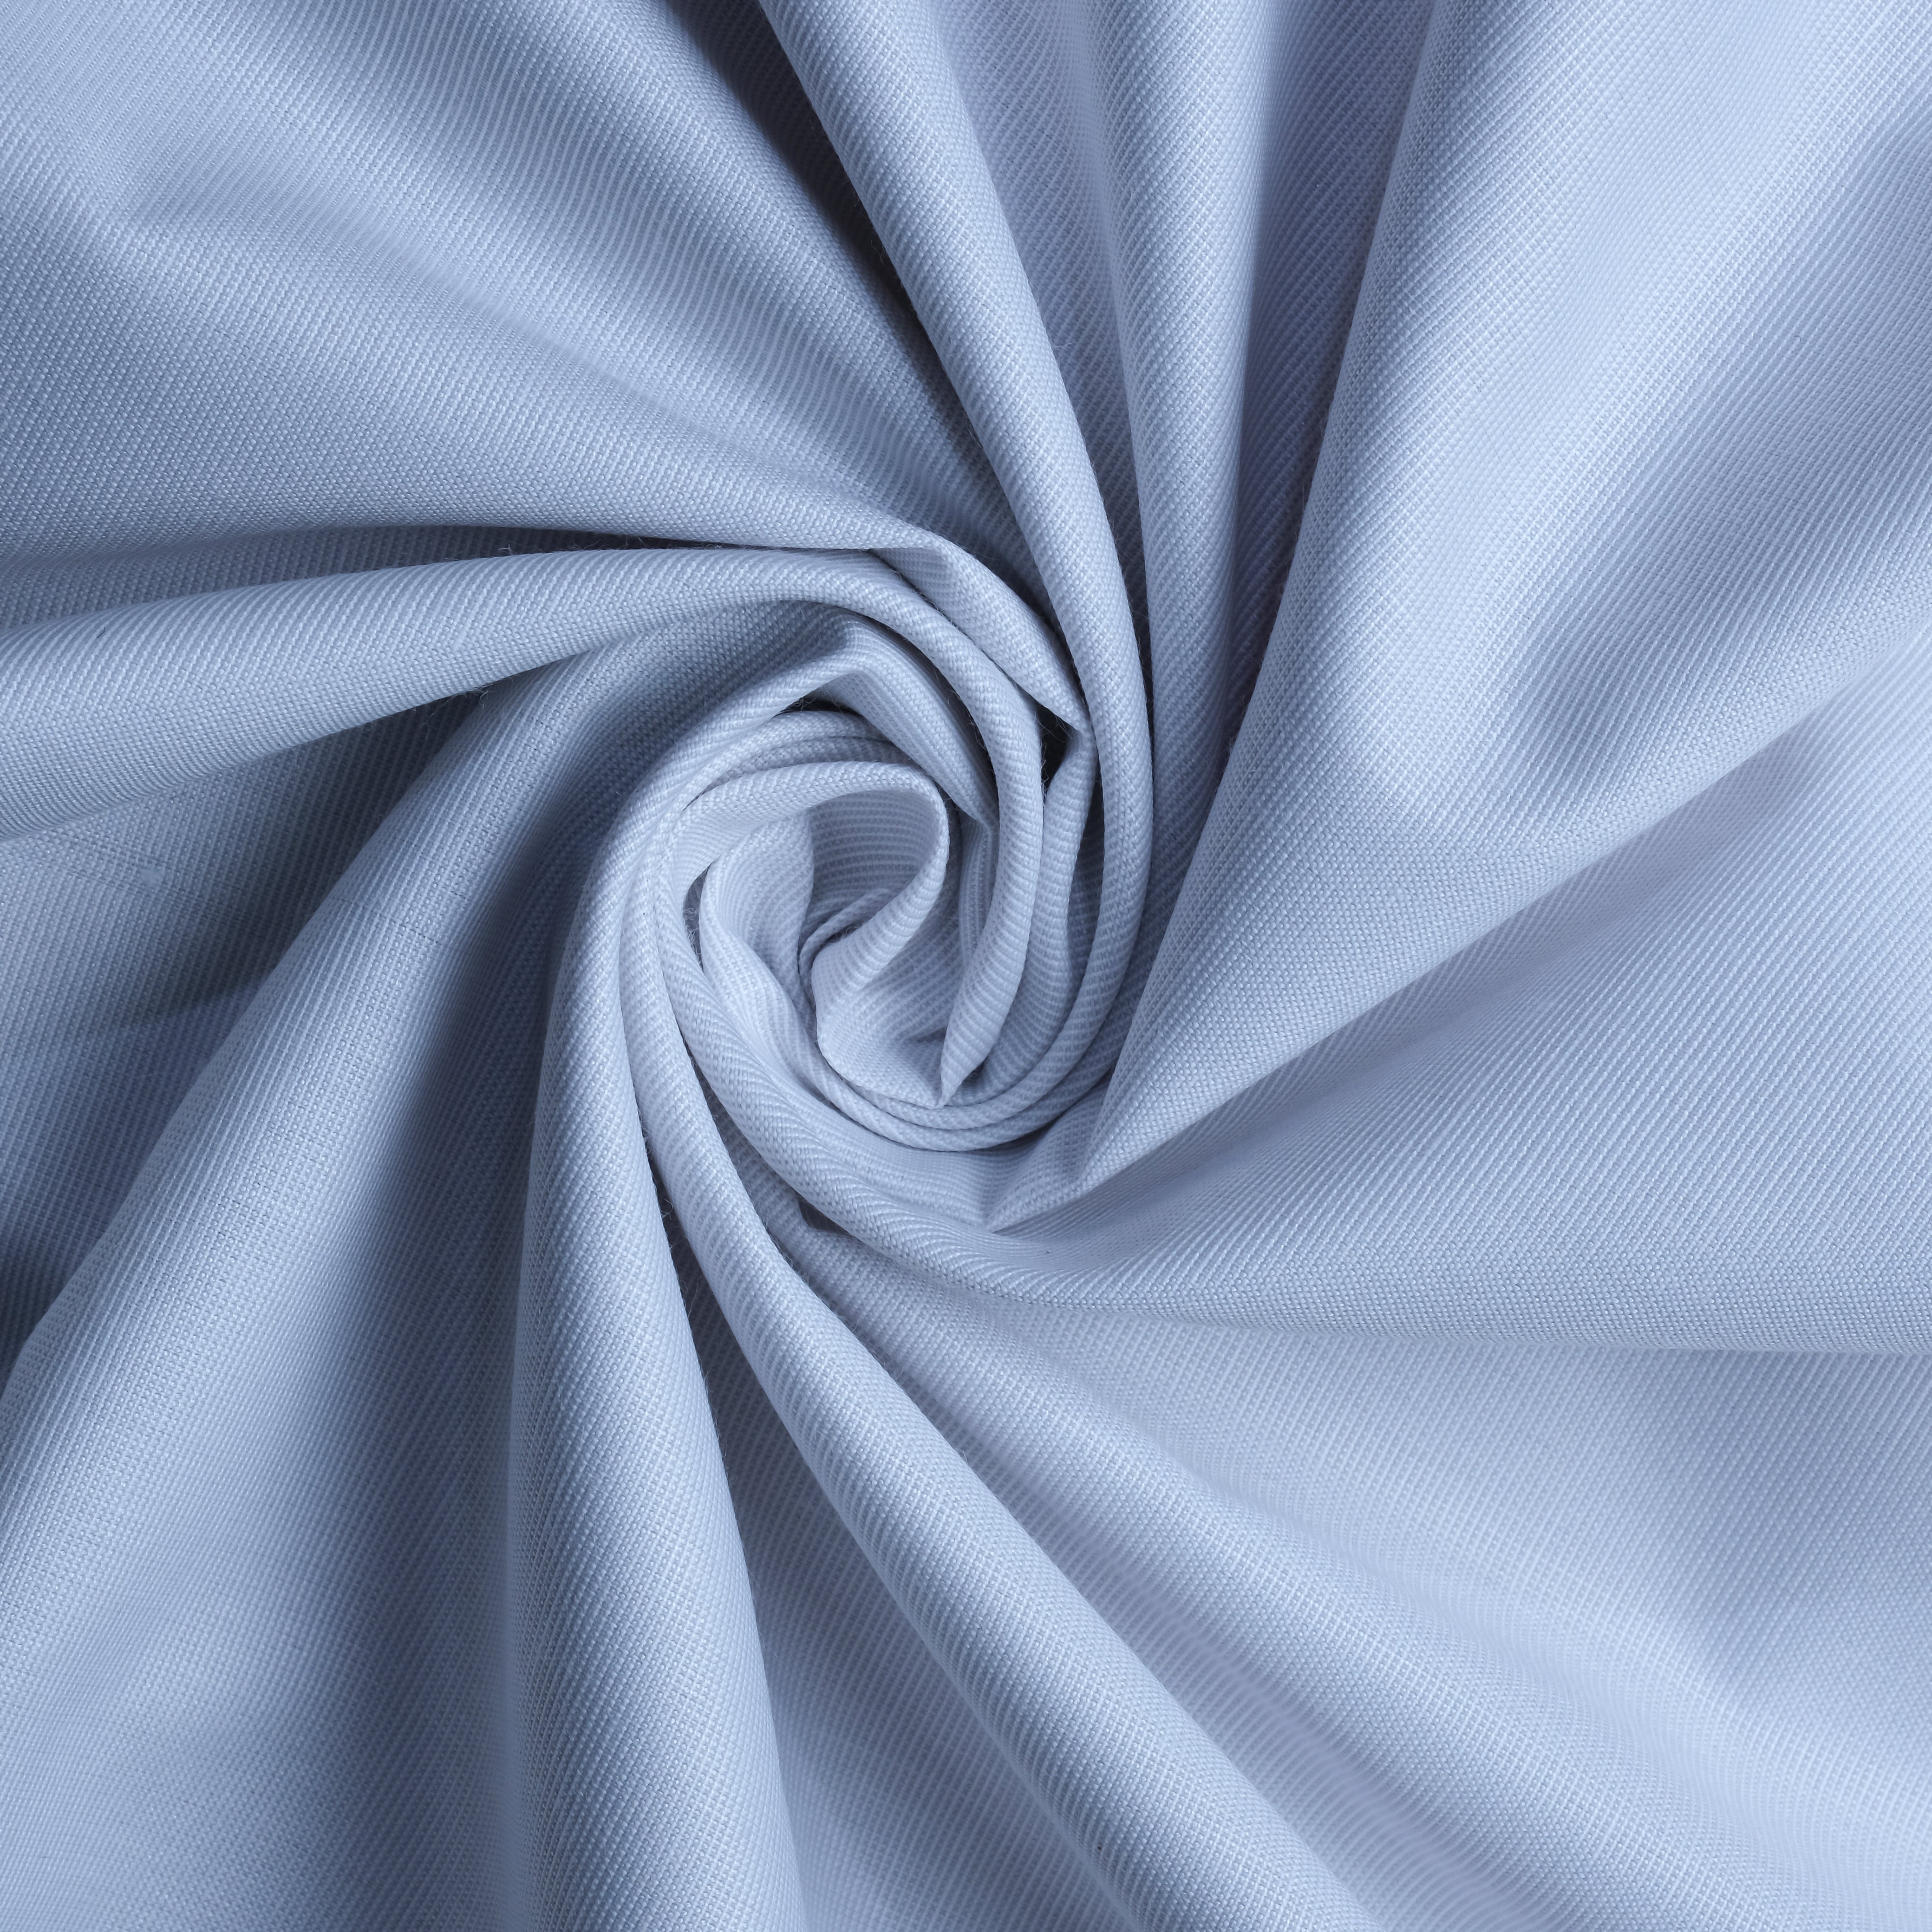 White 100% Pure Egyptian FilaFil Cotton Plain Fabric